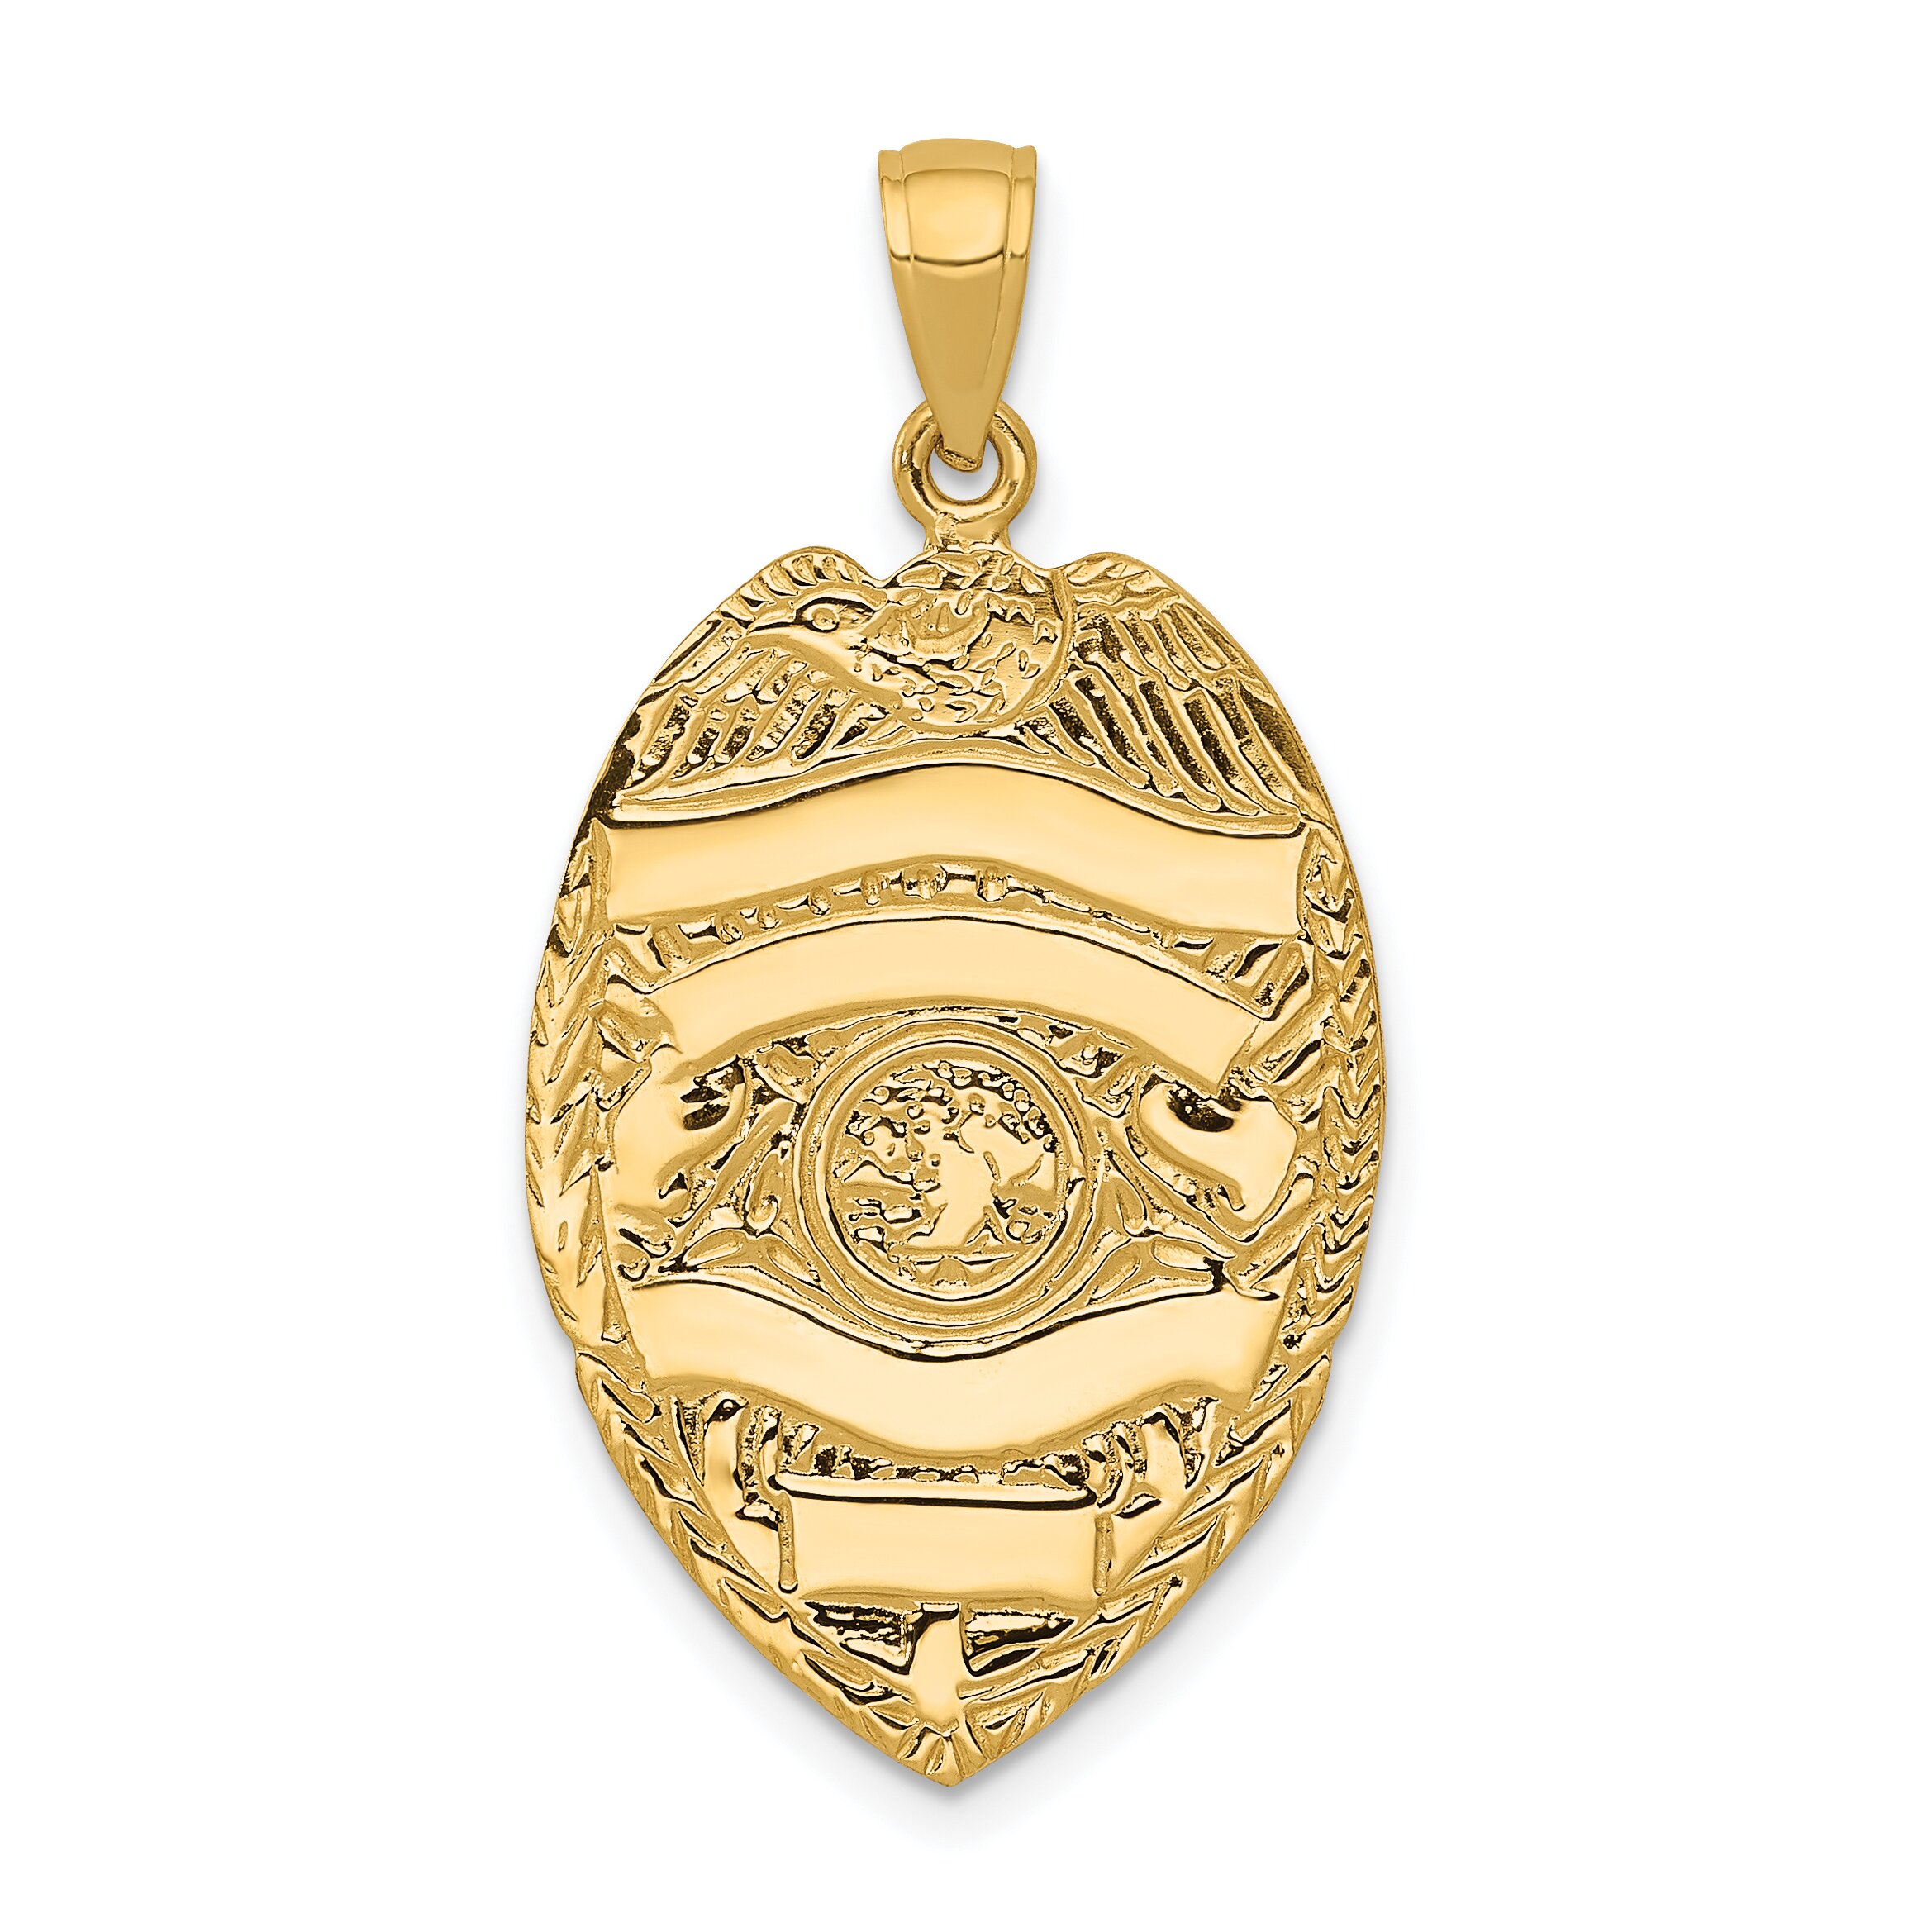 Findingking 14K Gold Police Badge Charm